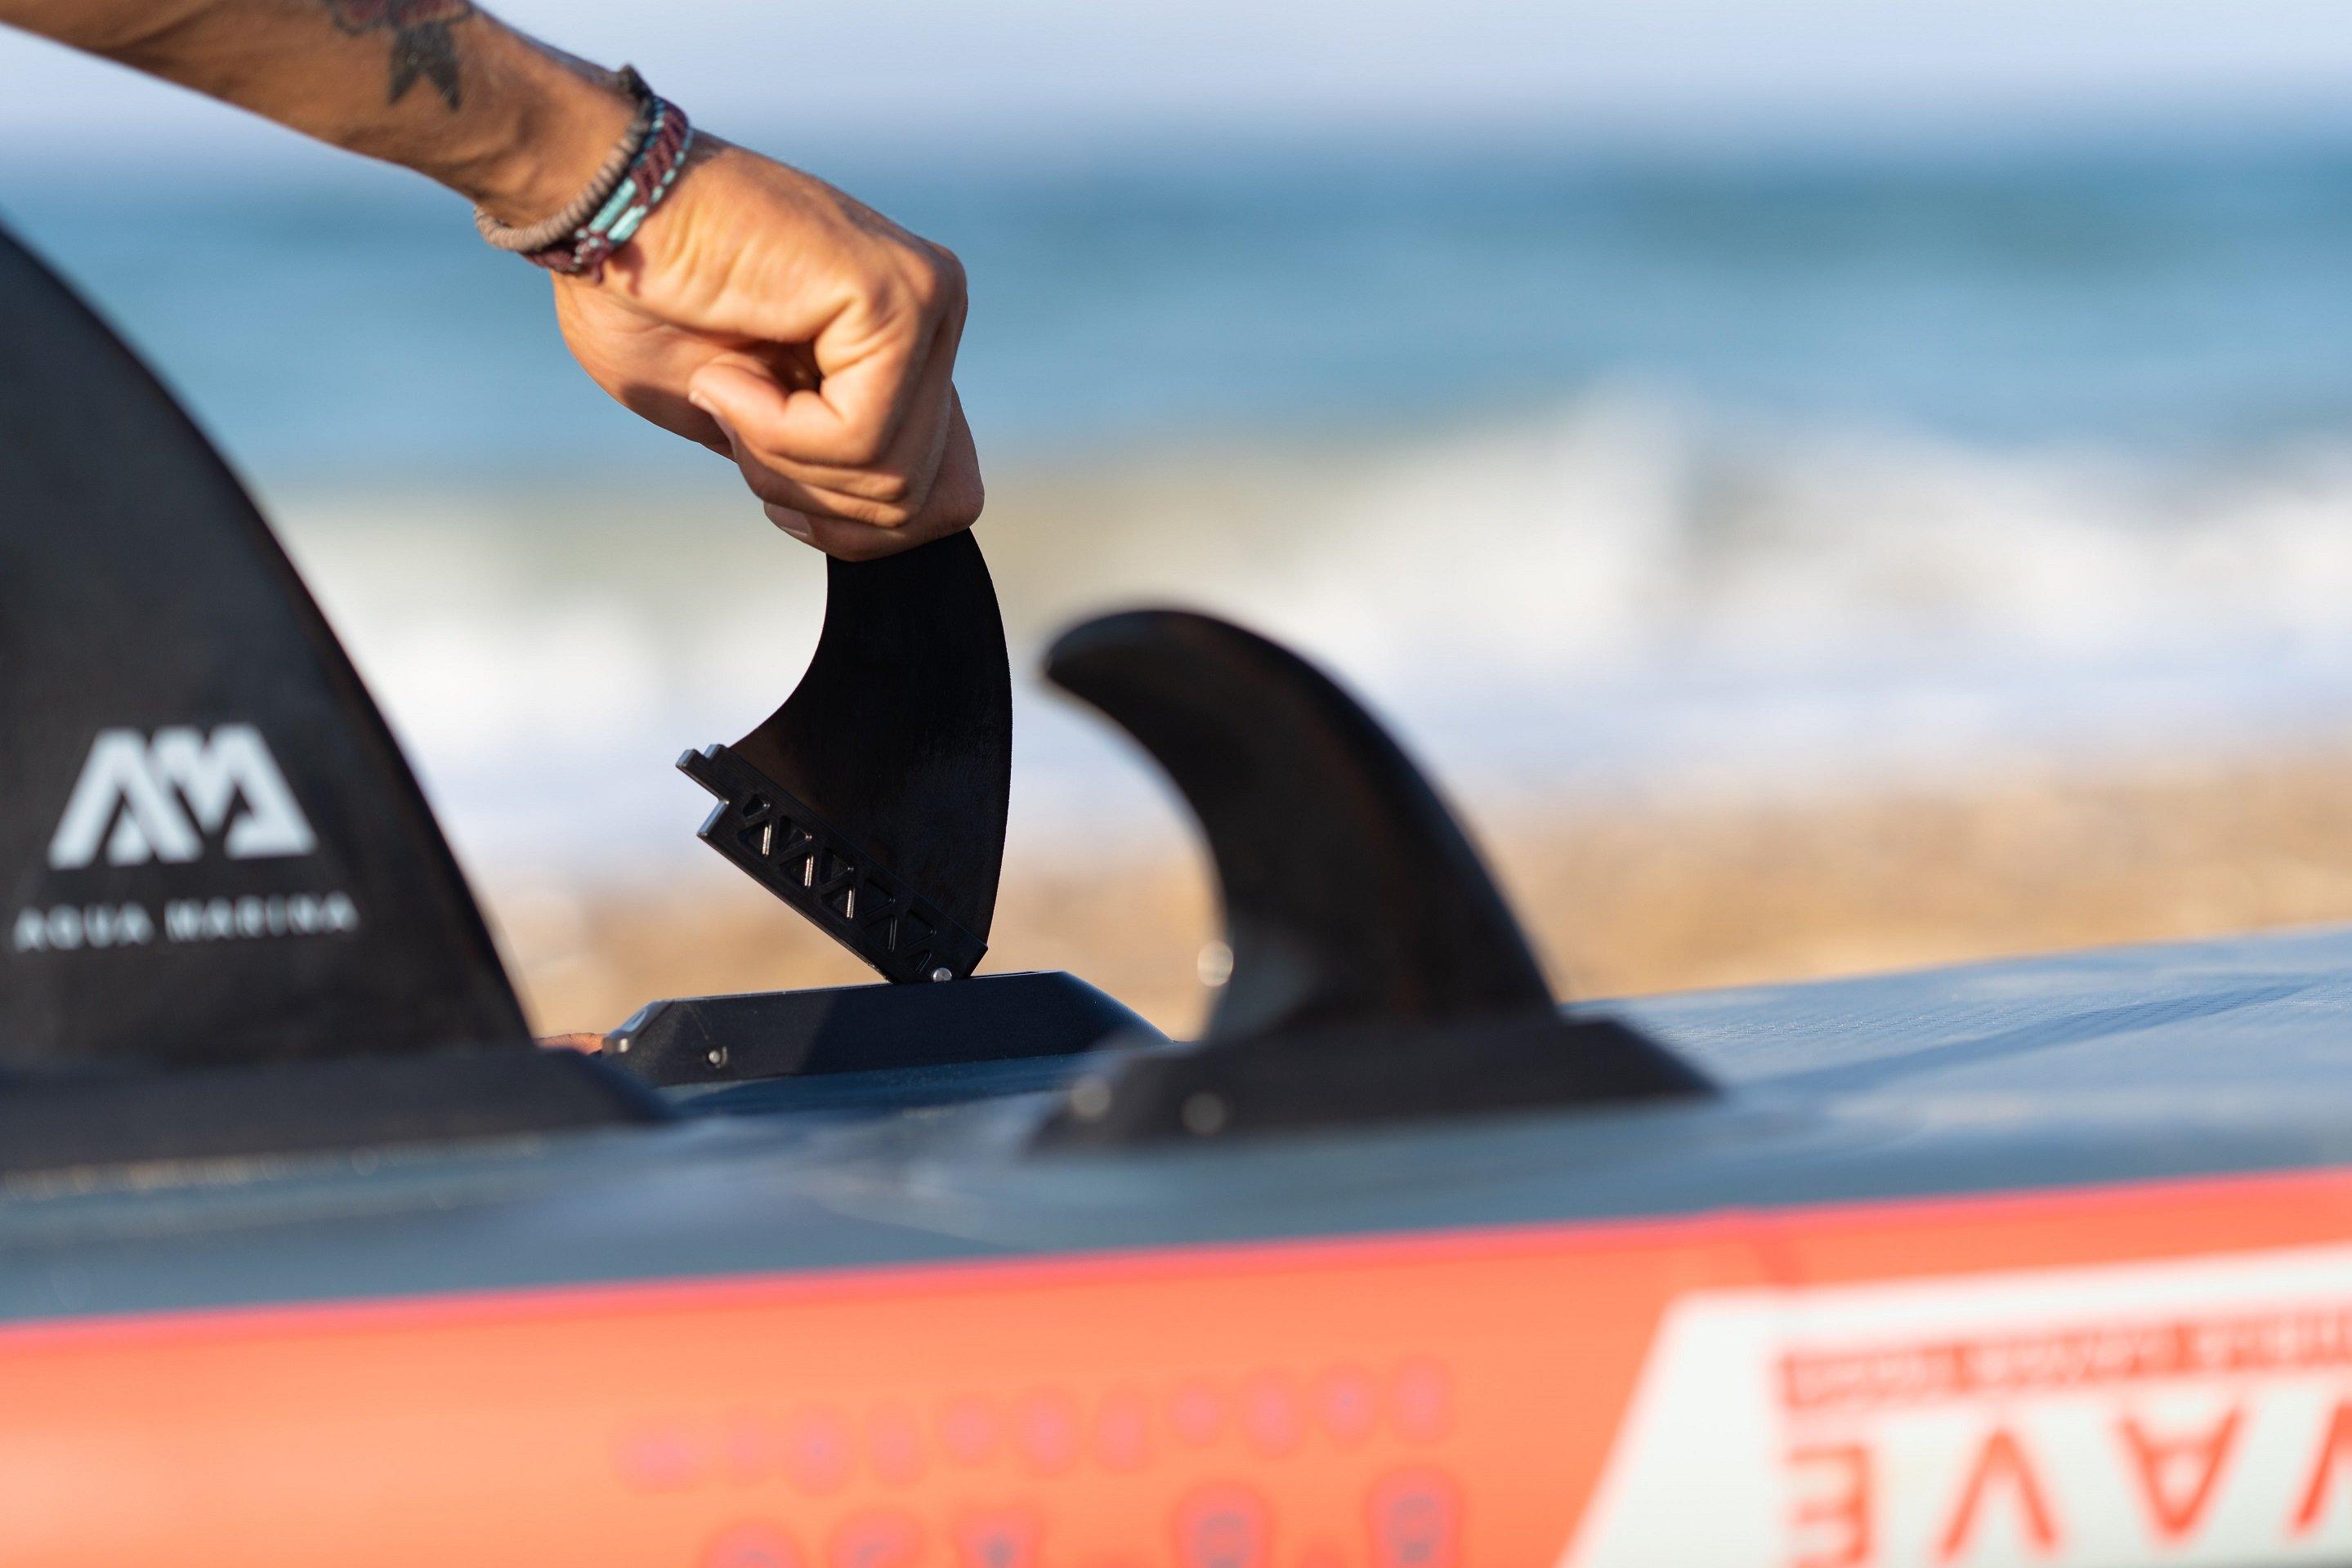 Wave Surf iSUP Paddle Board - DTI Direct USA